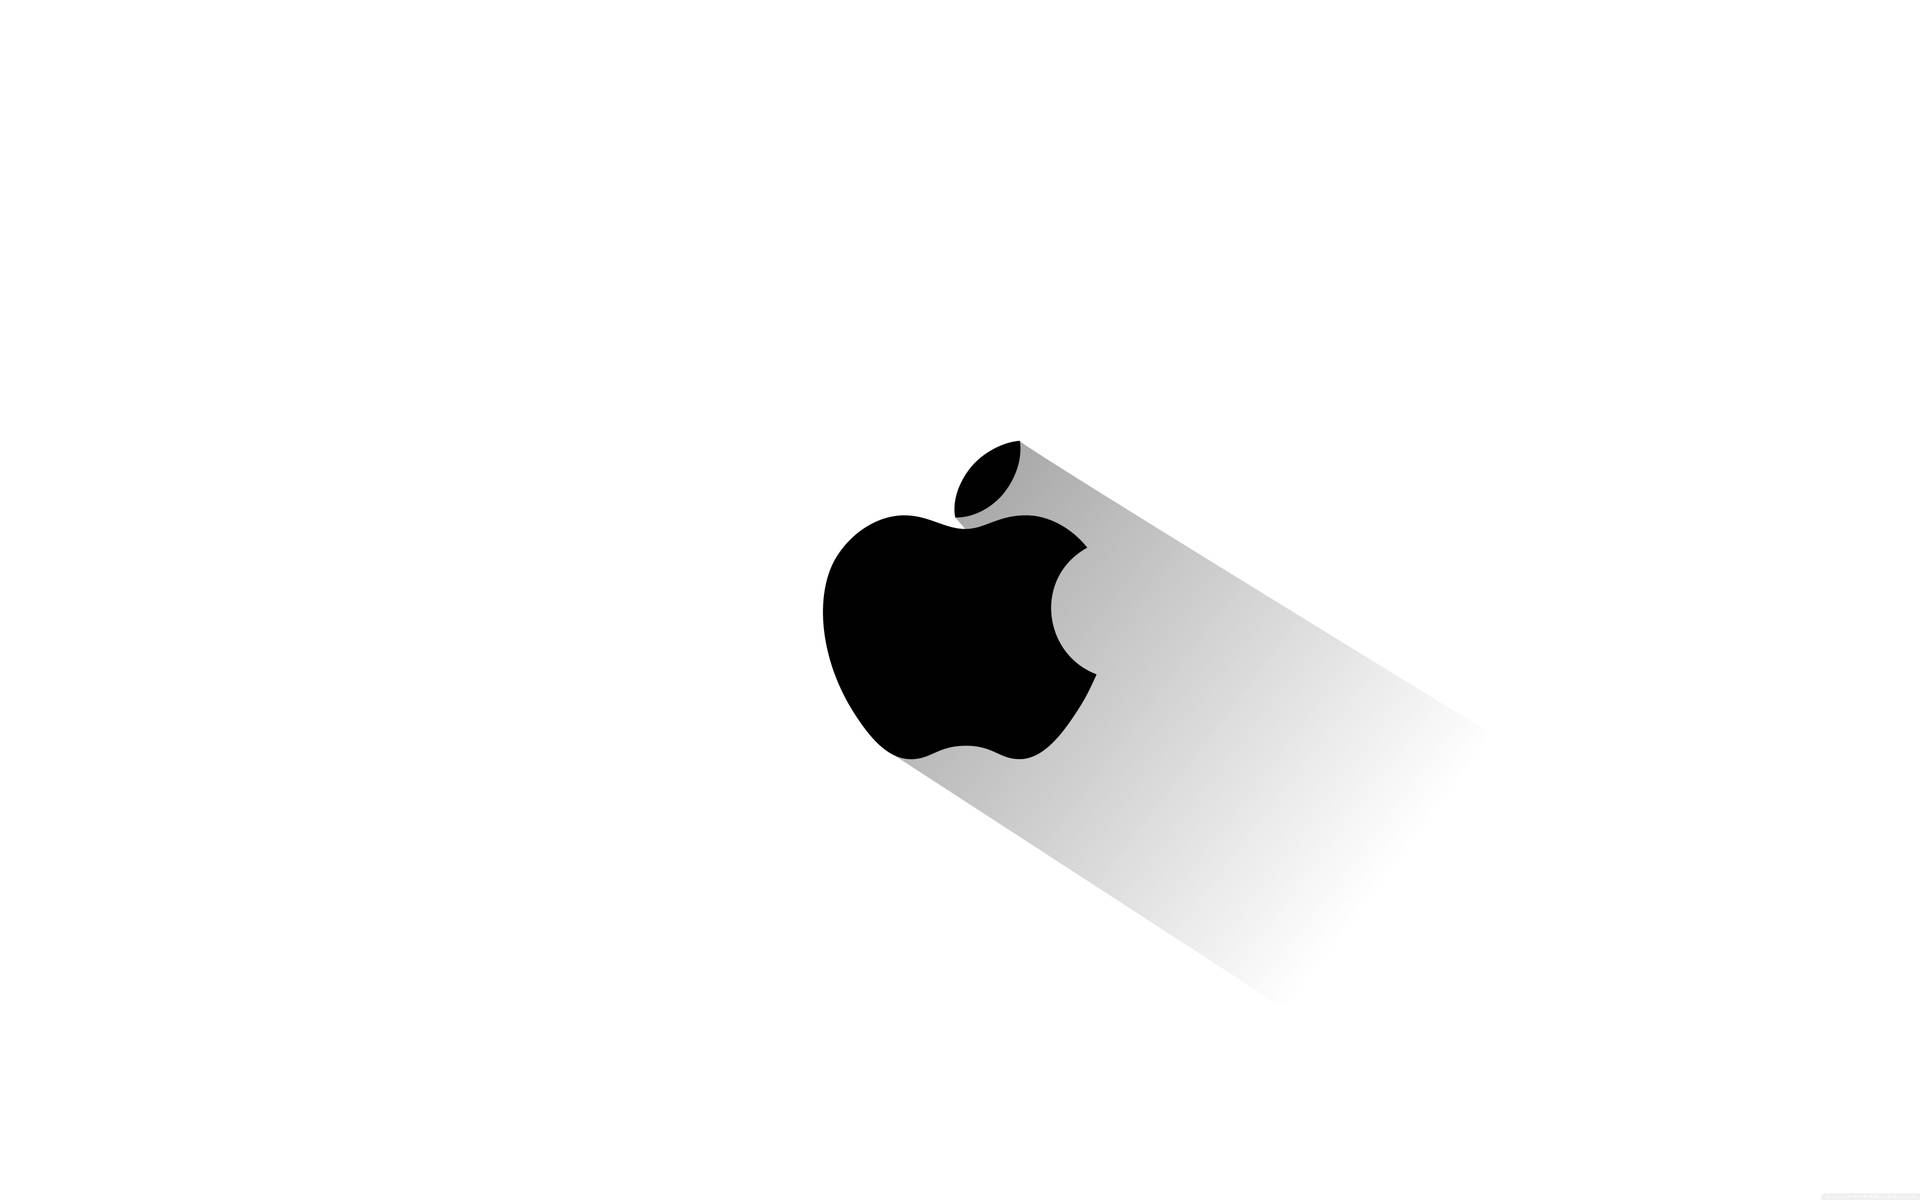 Free Apple Wallpaper Downloads, Apple Wallpaper for FREE